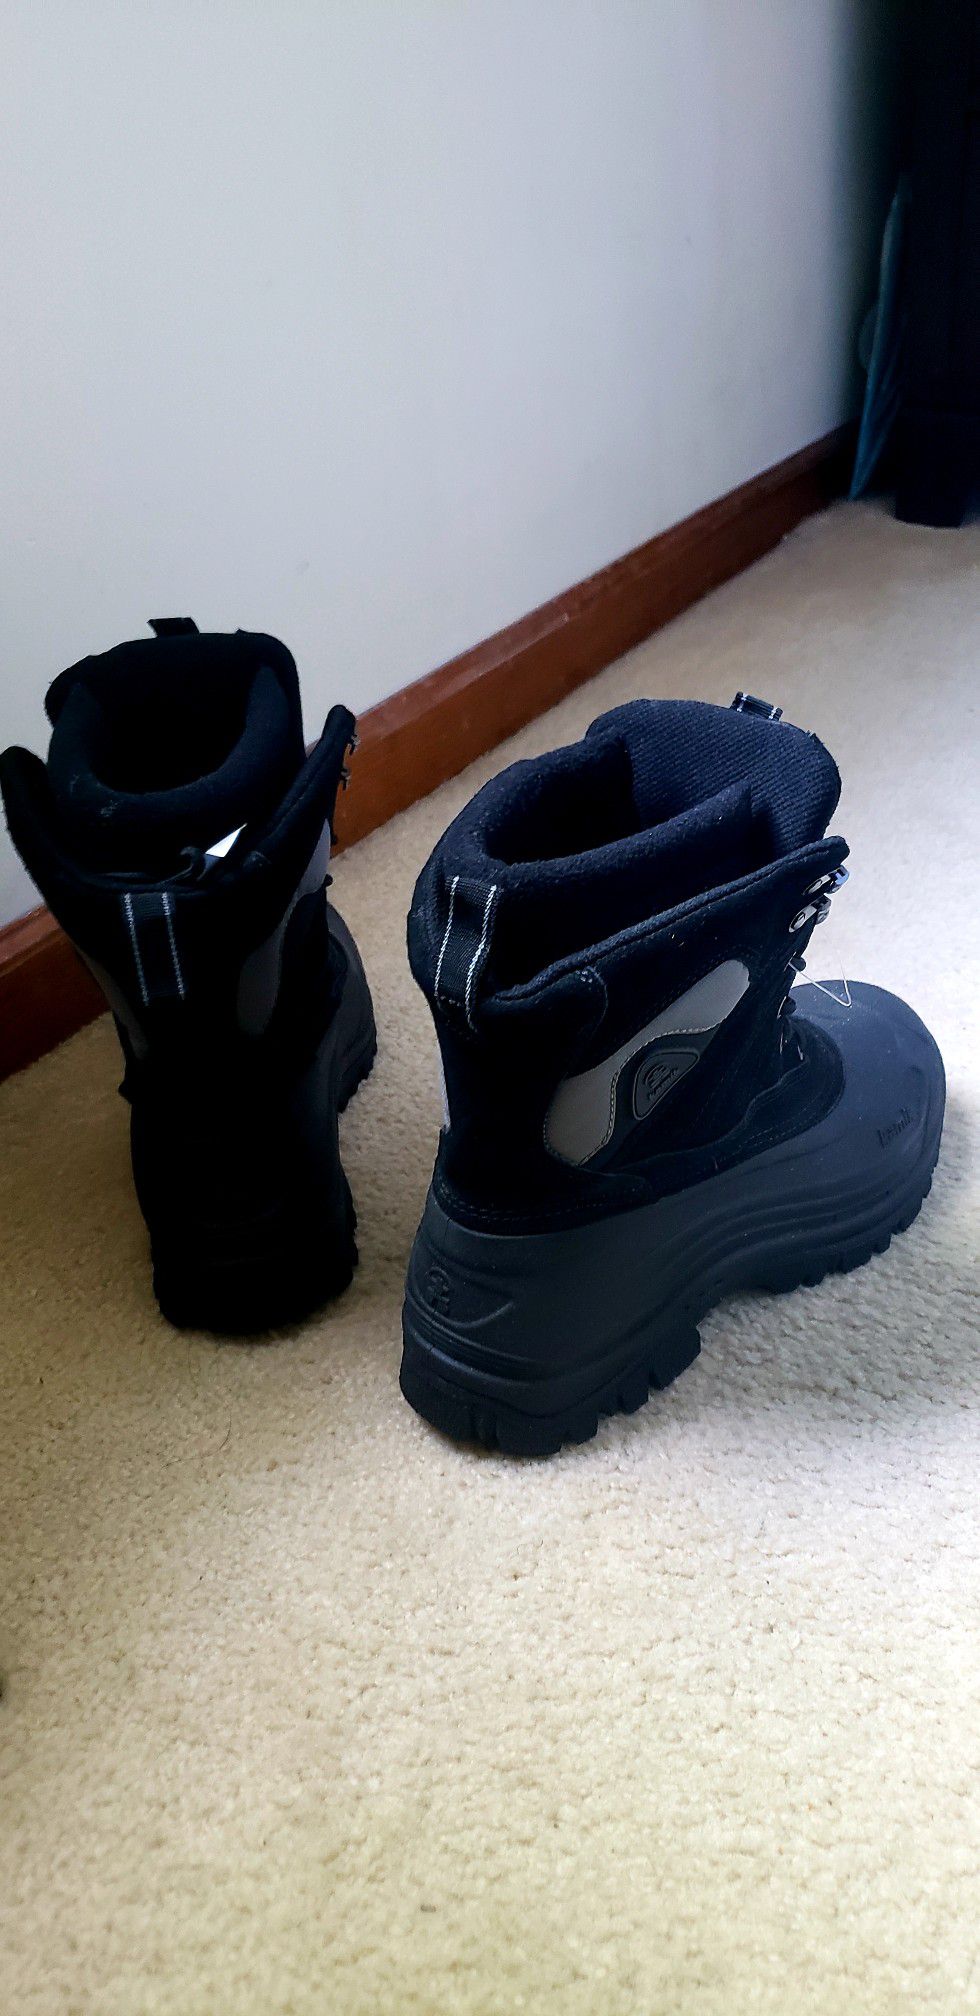 Snow boots/Freezer boots